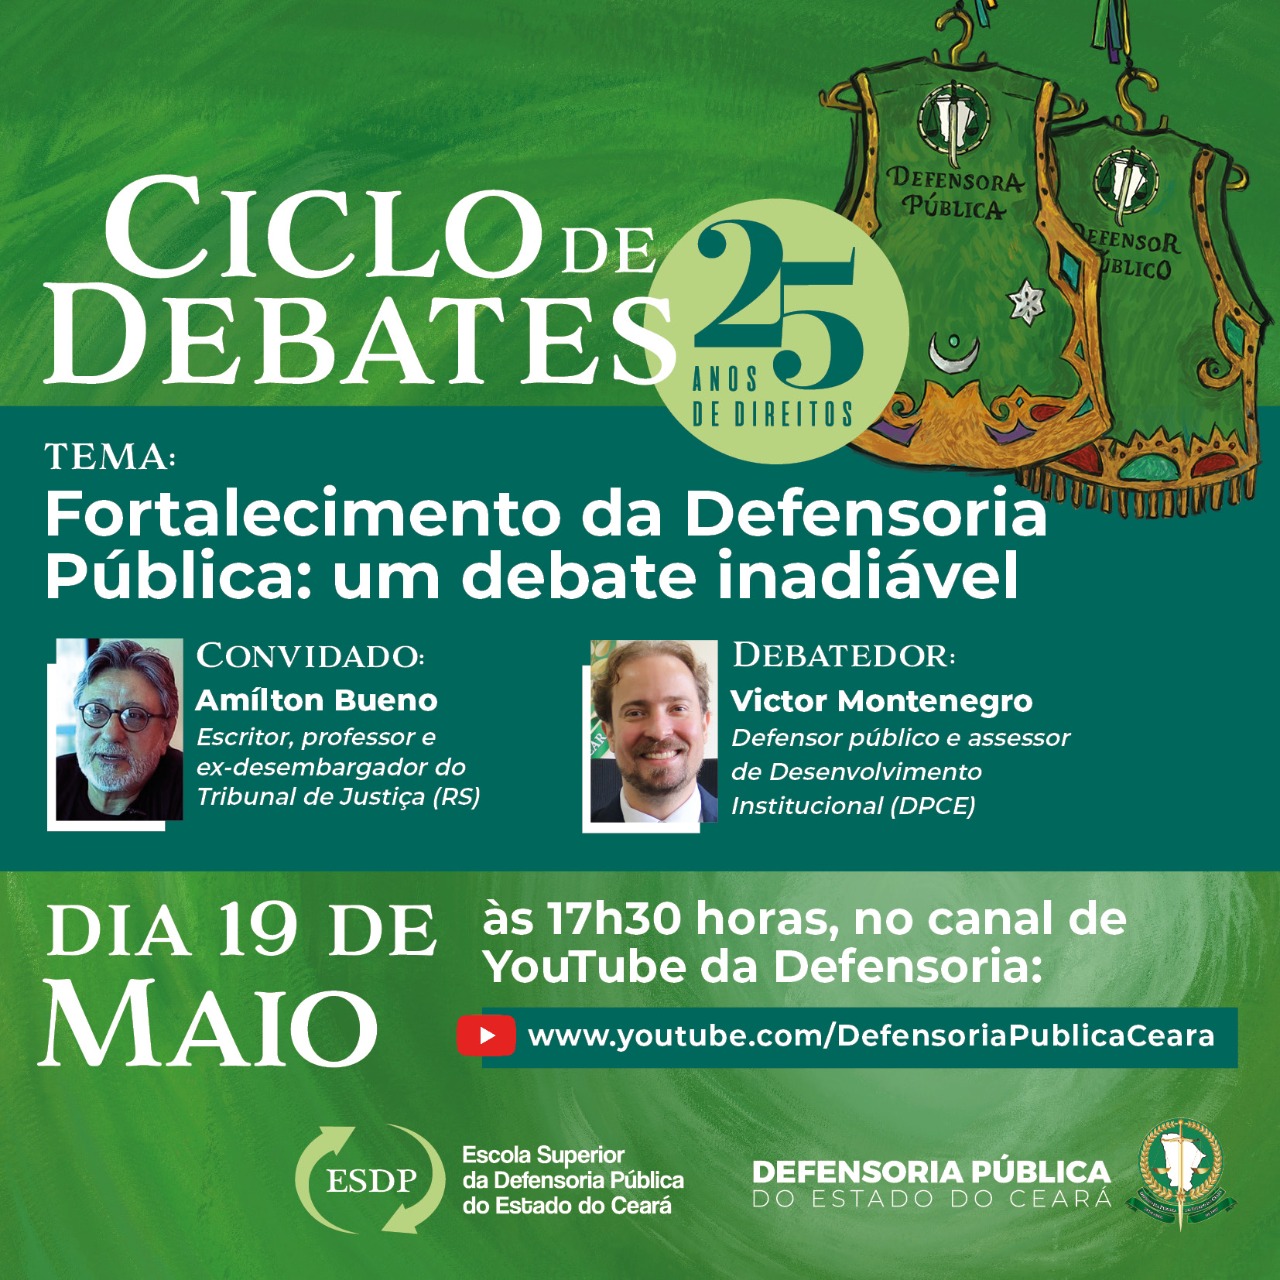 Ciclo de Debates - Fortalecimento da Defensoria Pública: Um Debate Inadiável